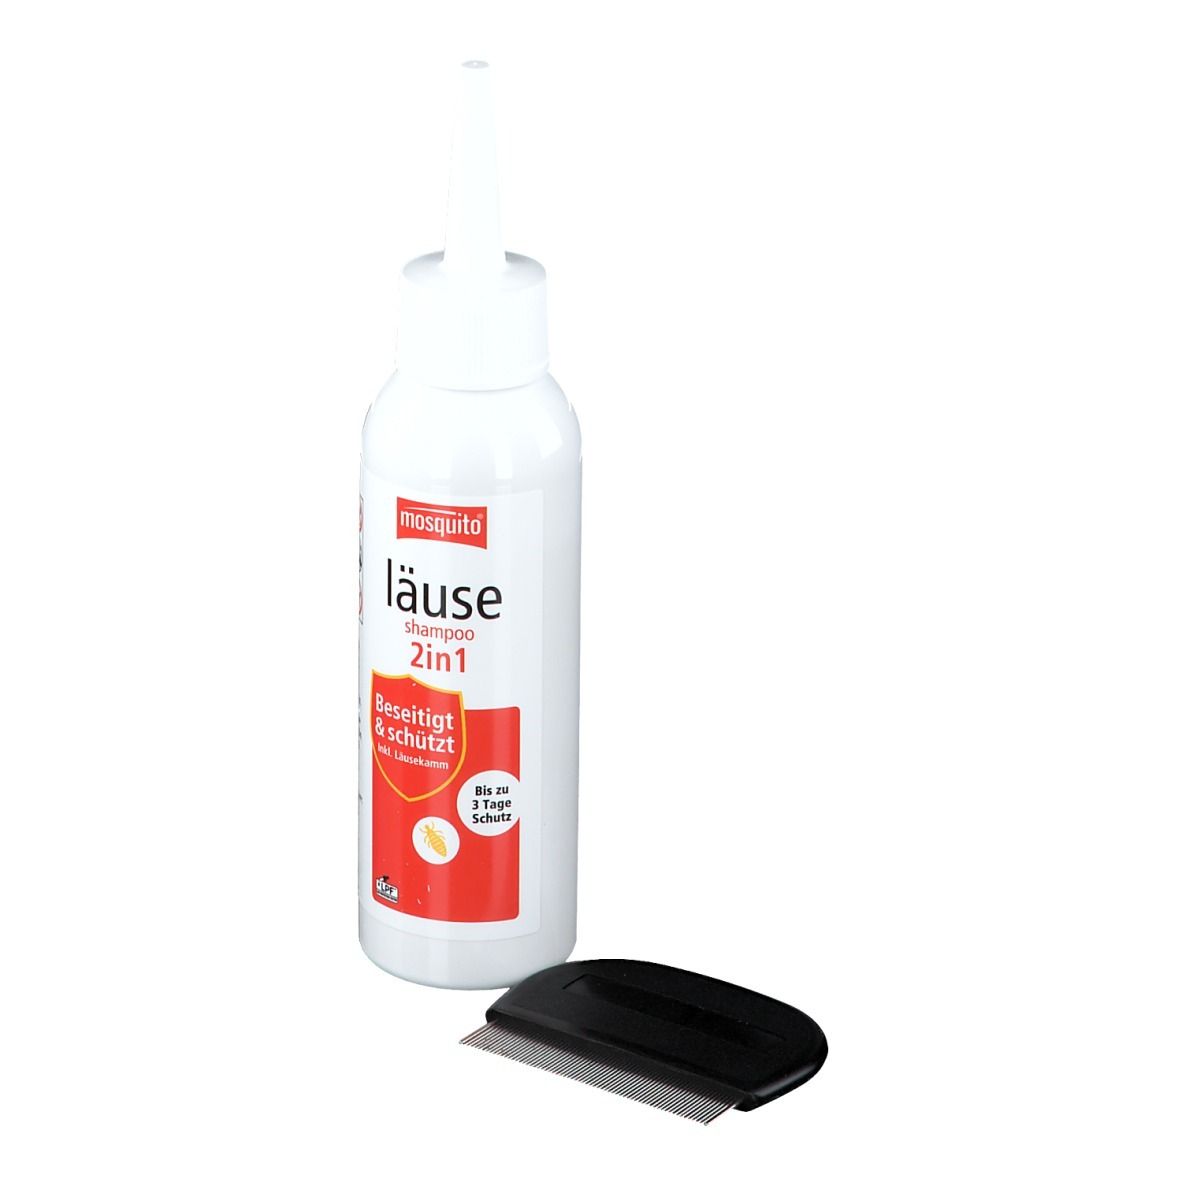 mosquito® Läuse-Shampoo 2in1